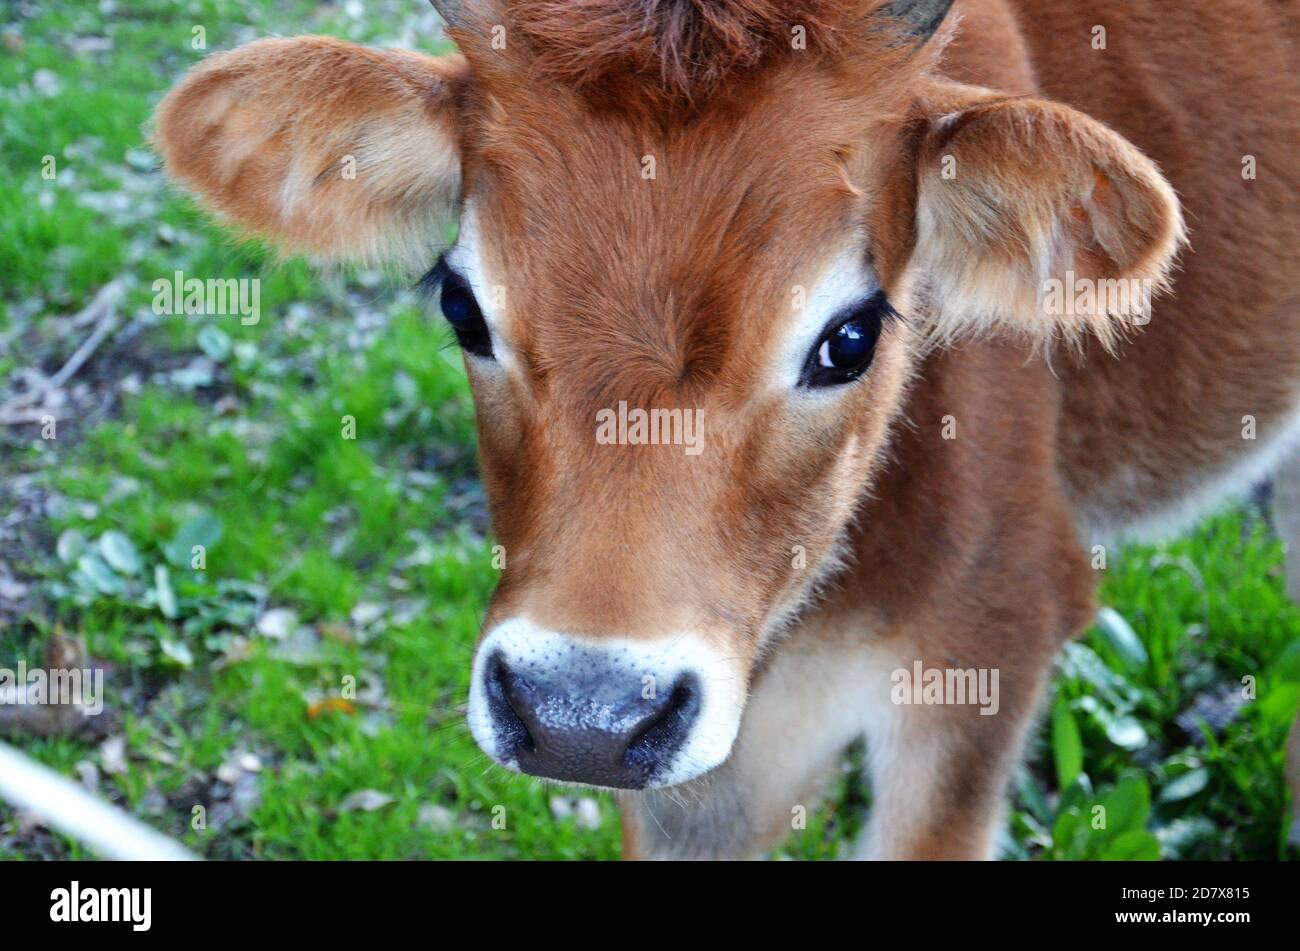 Cute Jersey cow calf close up Stock Photo - Alamy